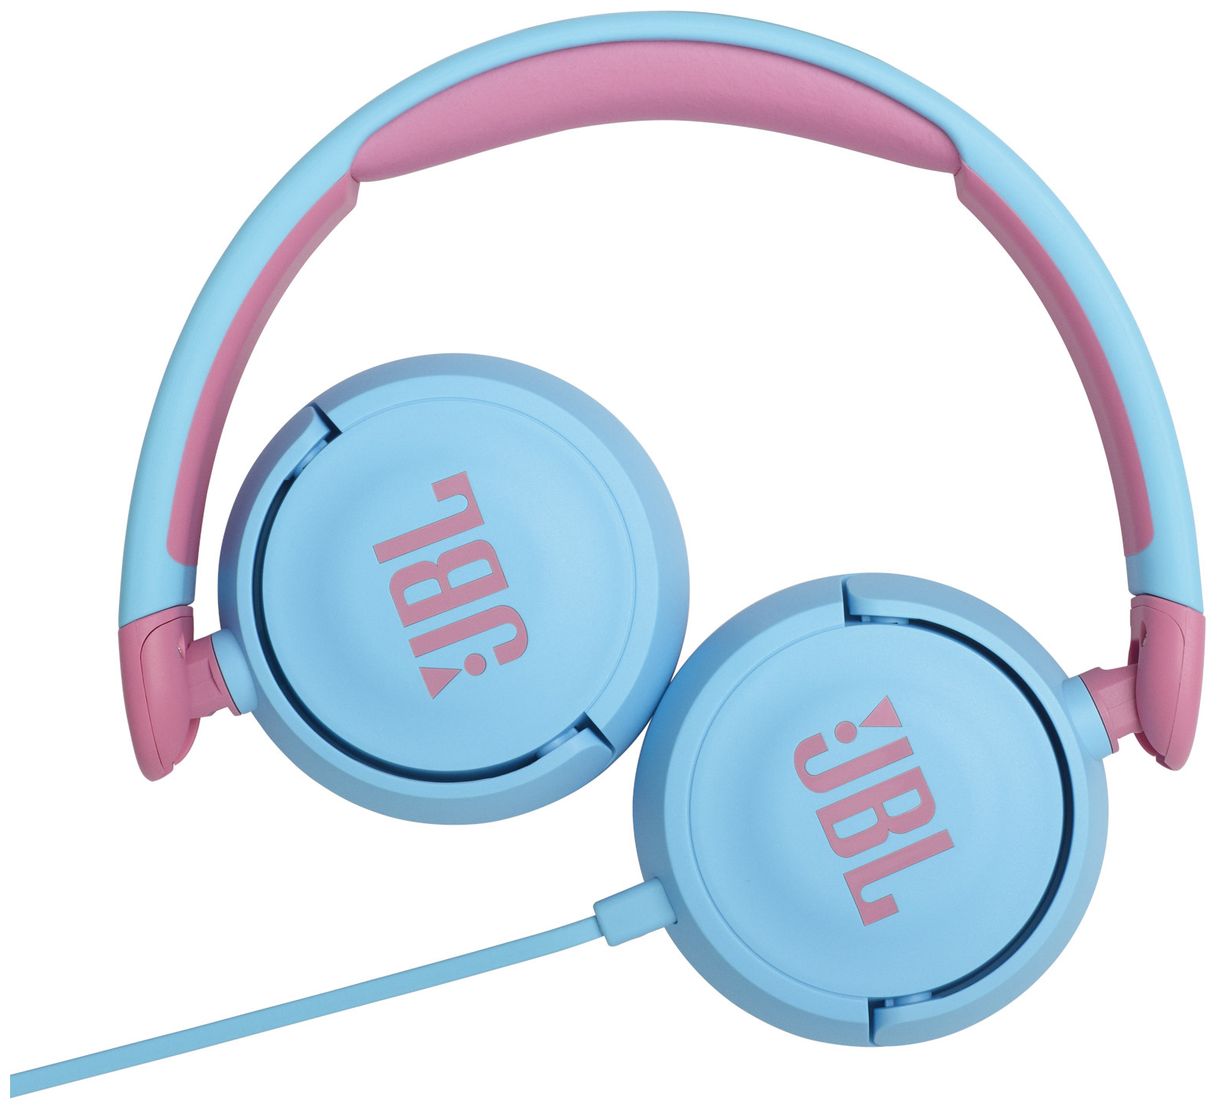 Jr310 Over Ear Kopfhörer Kabelgebunden (Blau) 